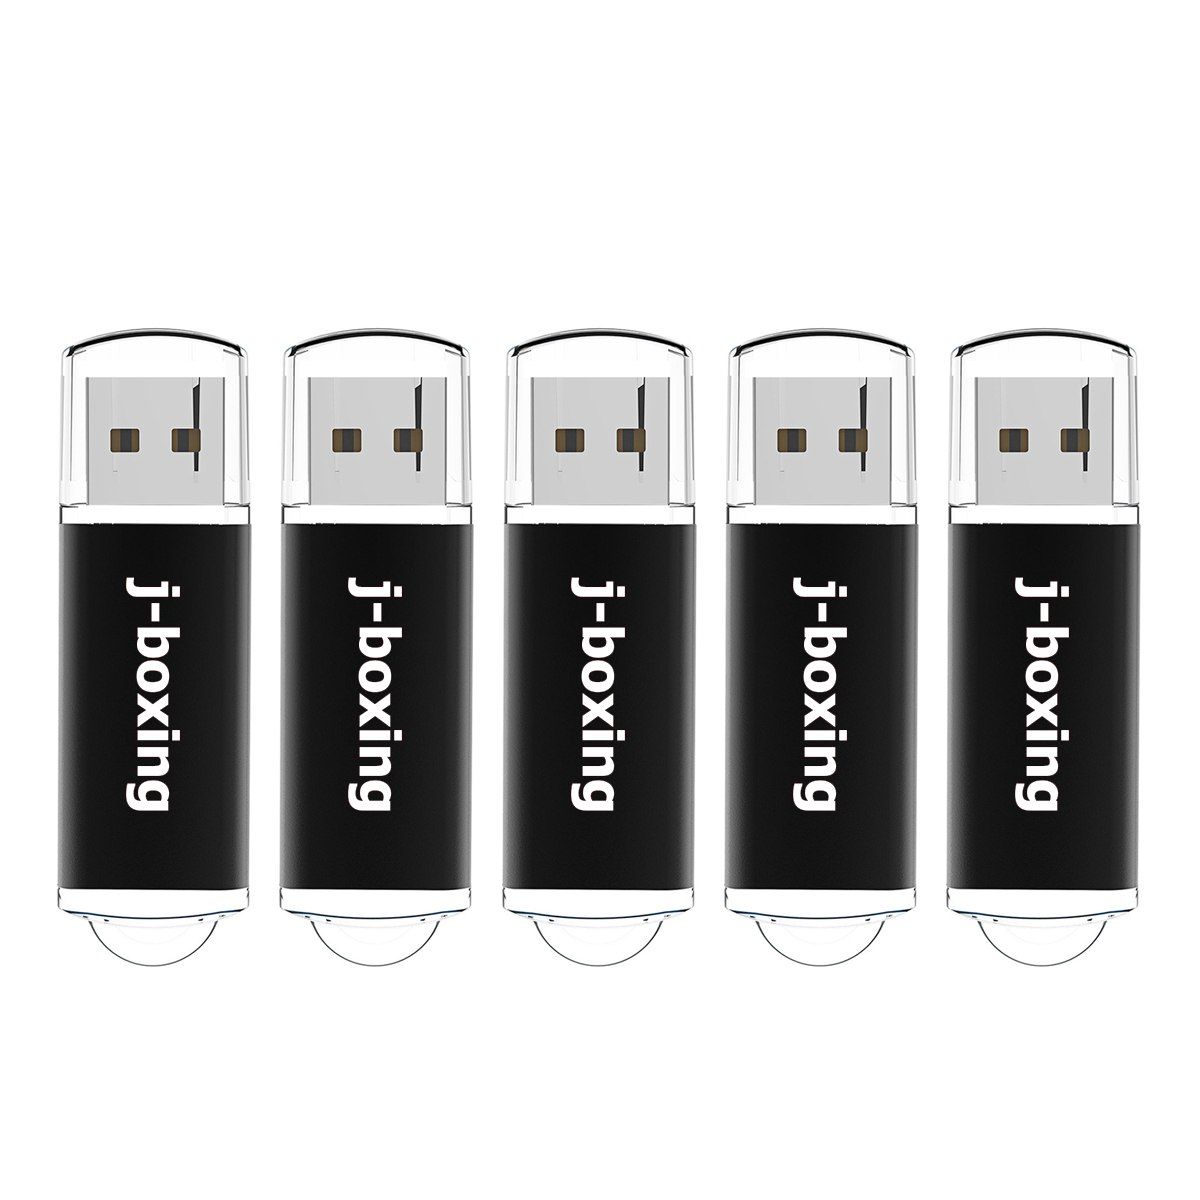 USB 2.0 Flash Drive Memory Pen Drive Storage Stick Cartoon Characters Lot